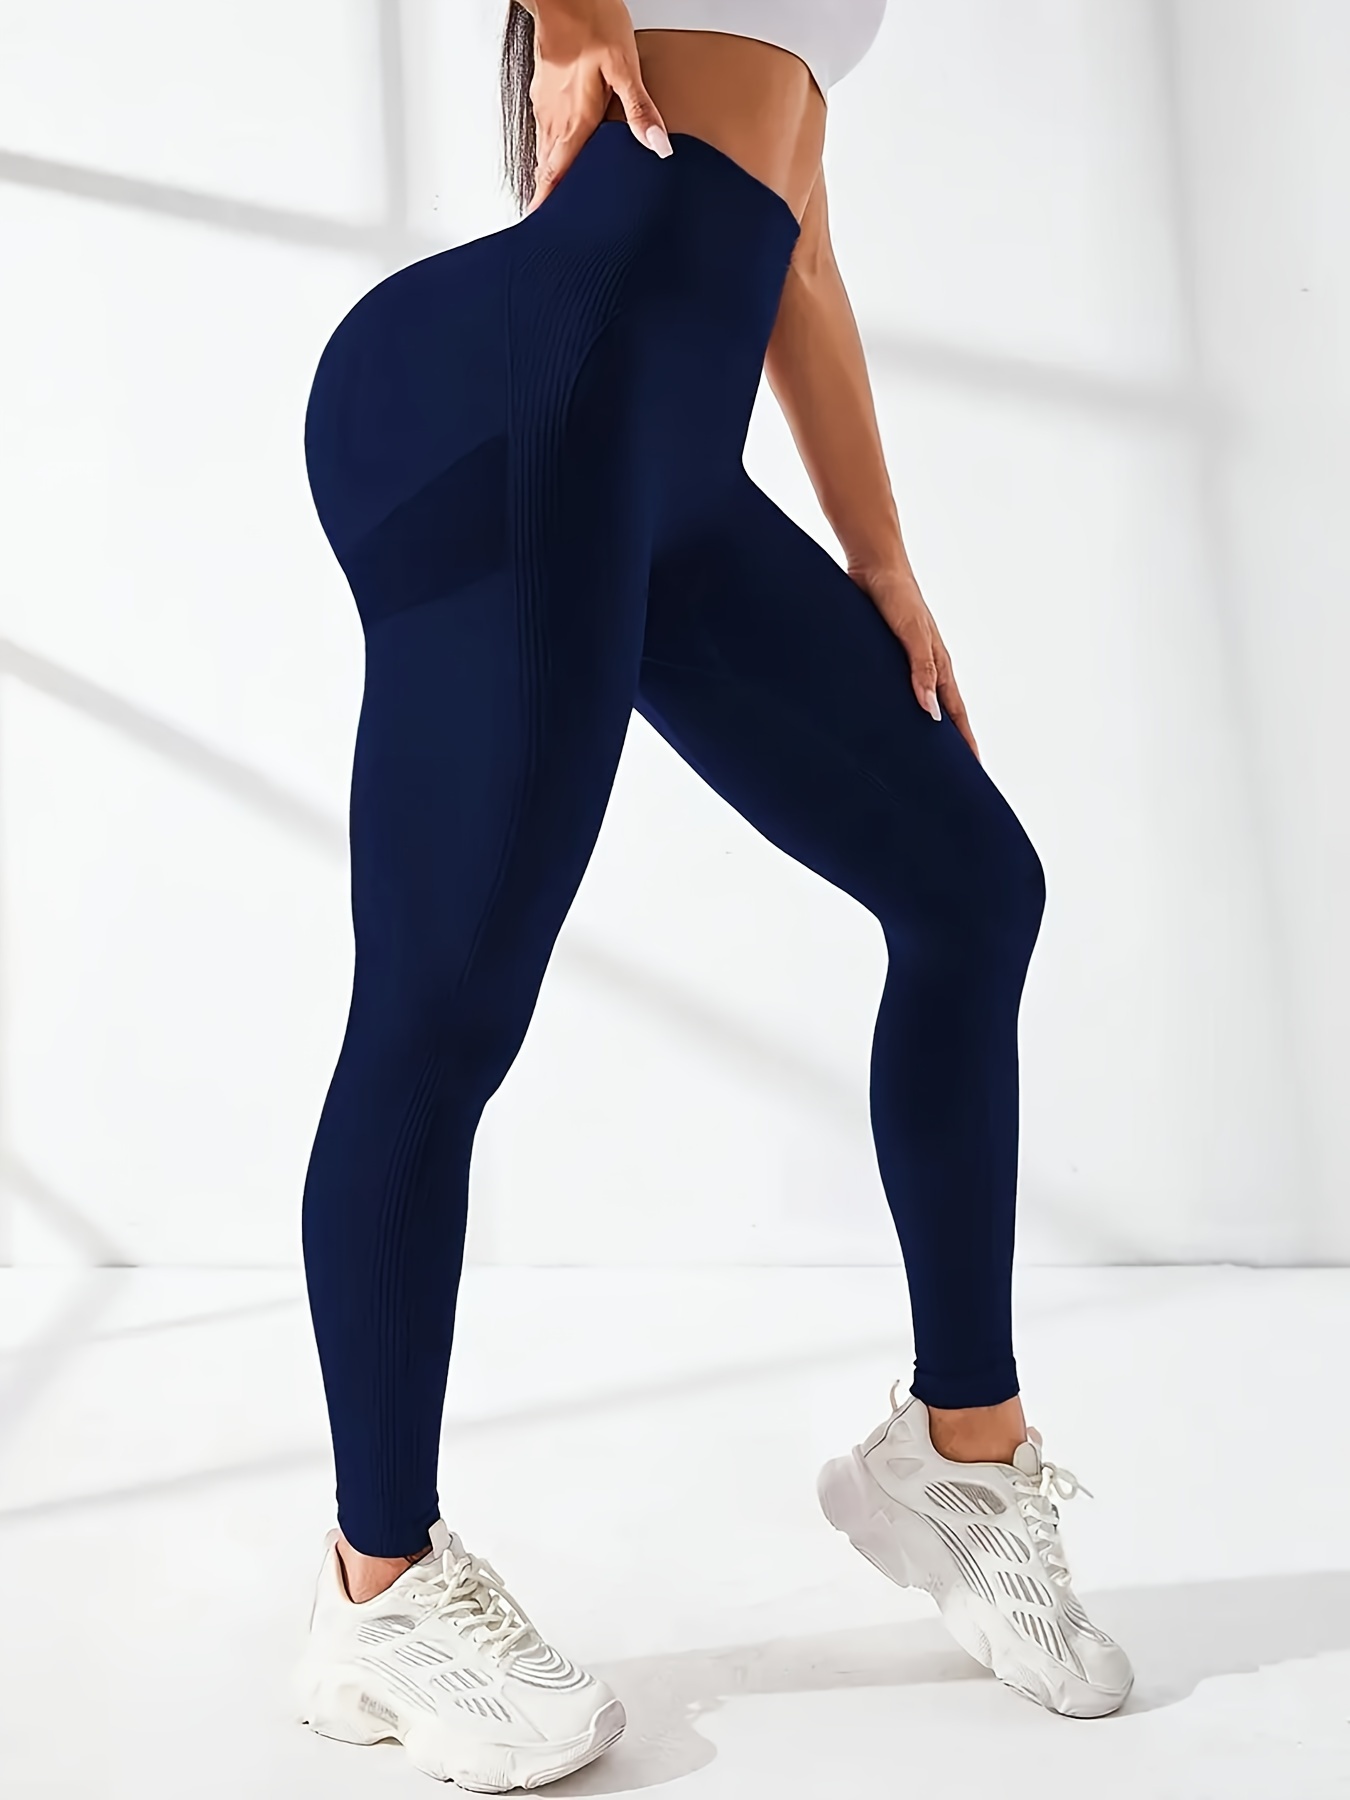 Womens Yoga Pants,High Waist Butt Lifting Casual Workout Leggings